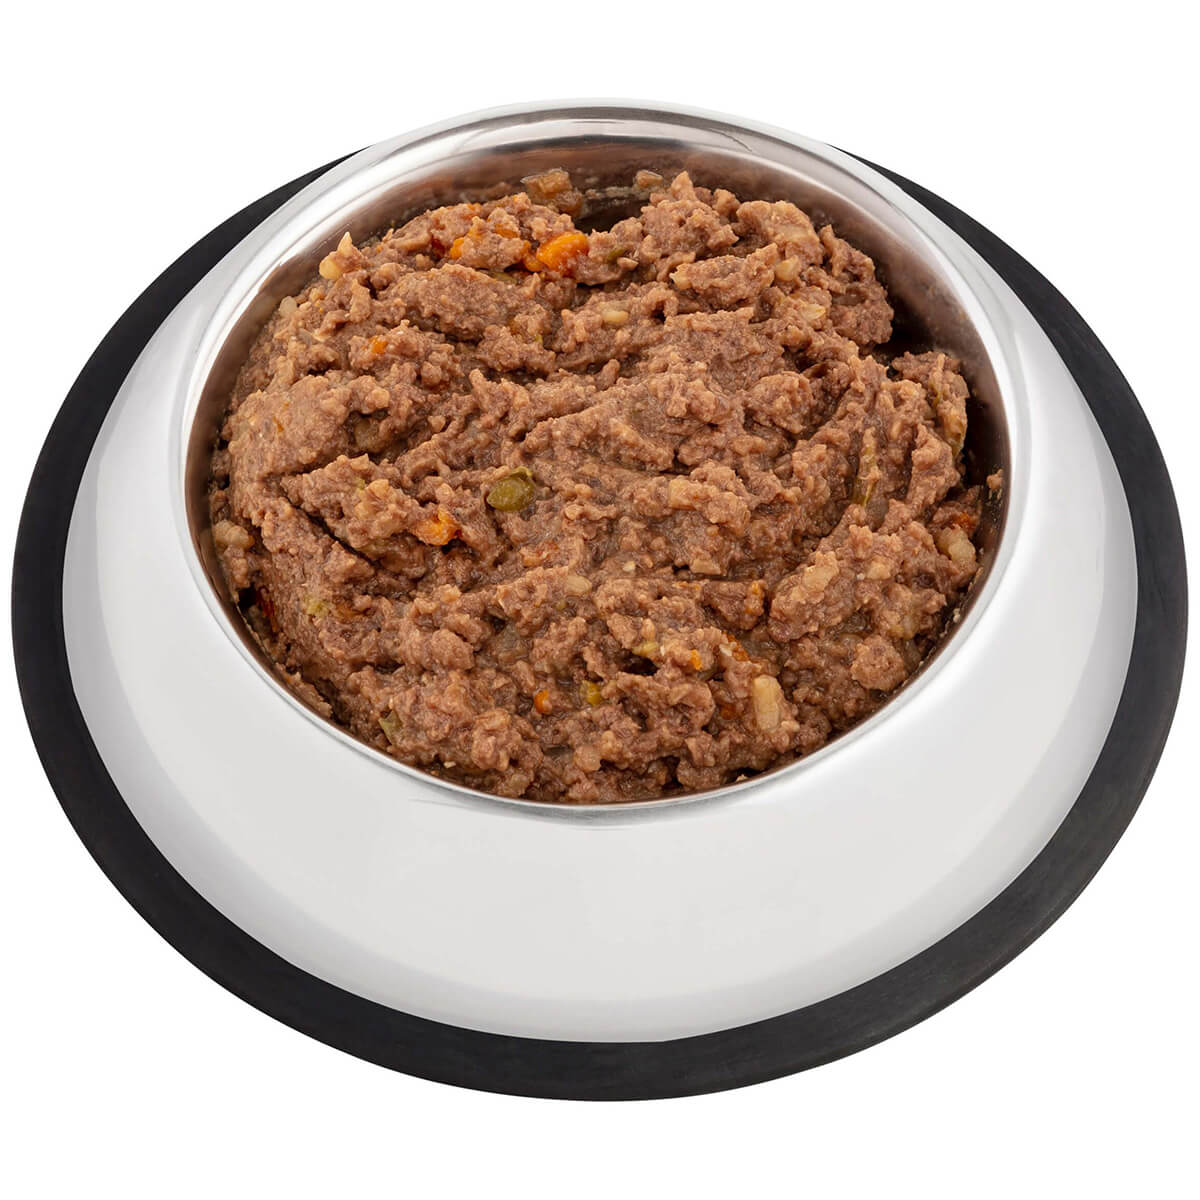 Ivory Coat Holistic Nutrition Adult Wet Dog Food Lamb & Brown Rice Loaf 400g